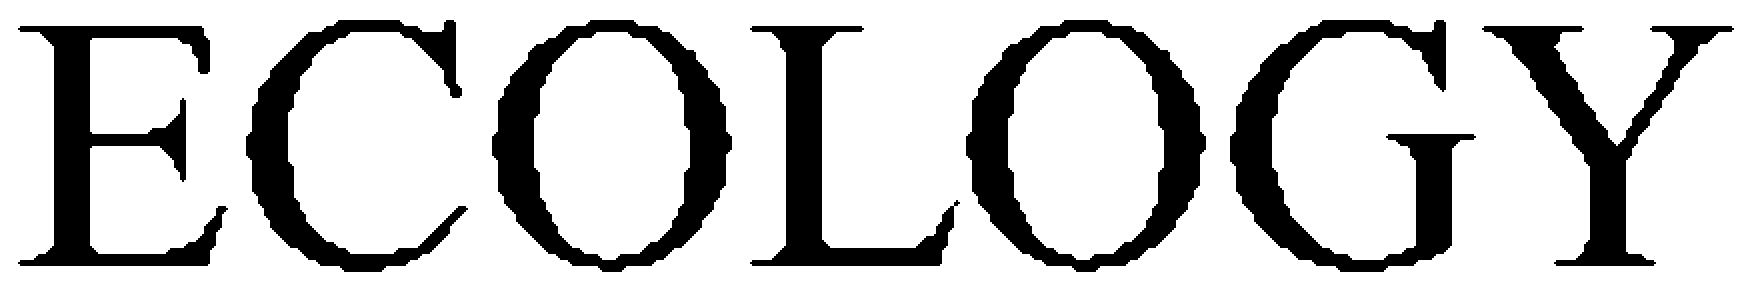 Trademark Logo ECOLOGY